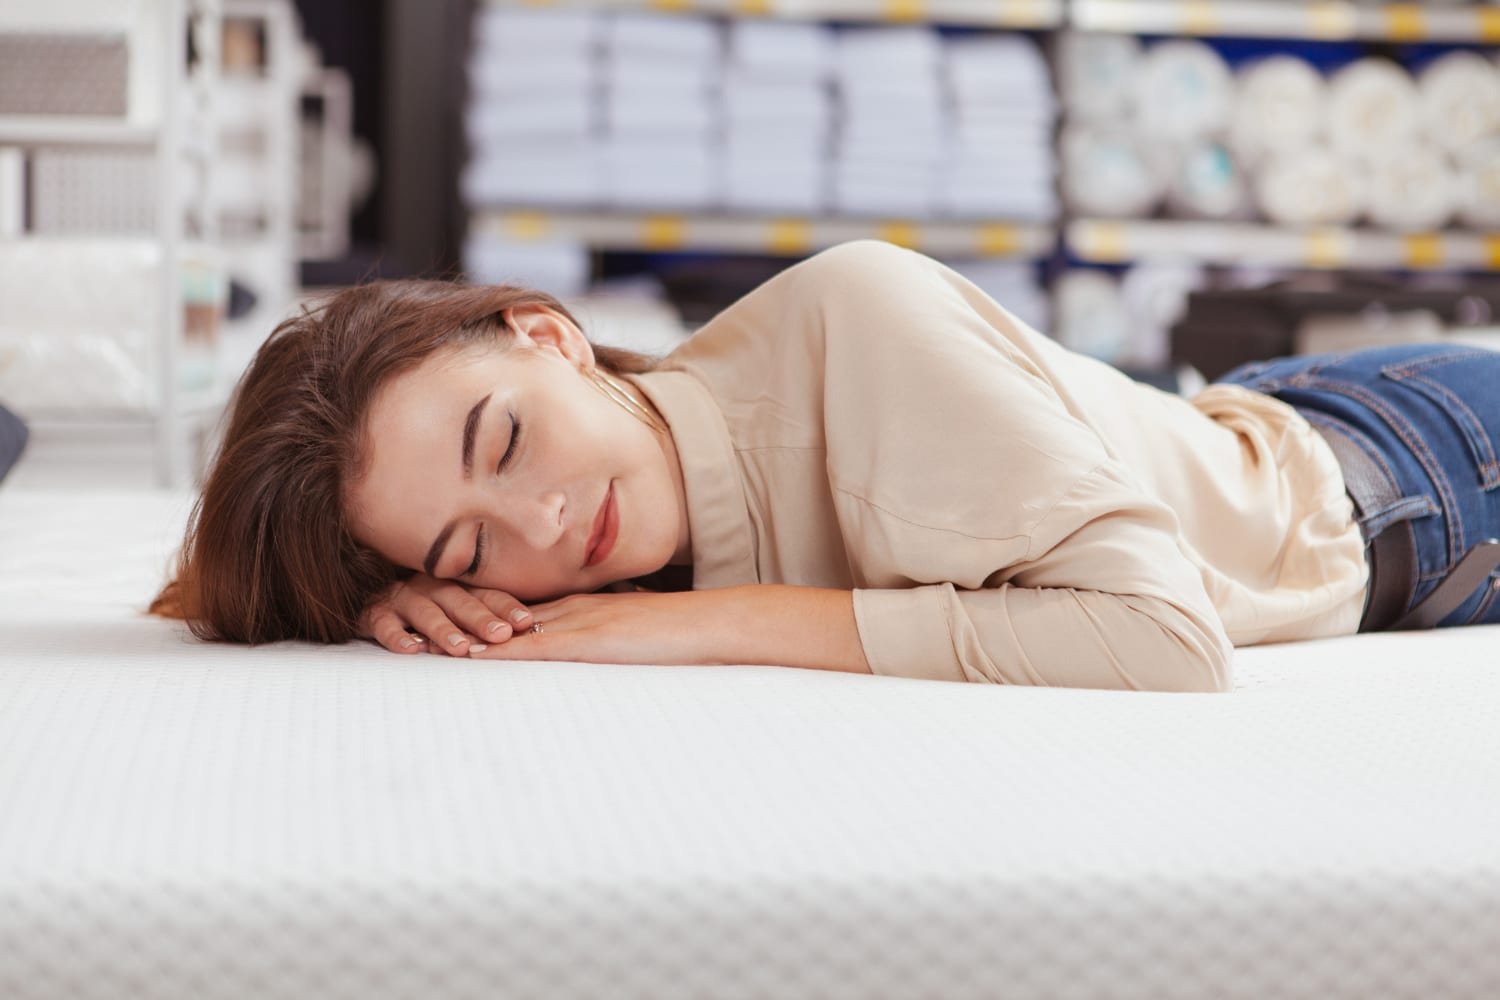 Sleep Comfortably With ViscoSoft’s High-Quality Memory Foam Mattresses